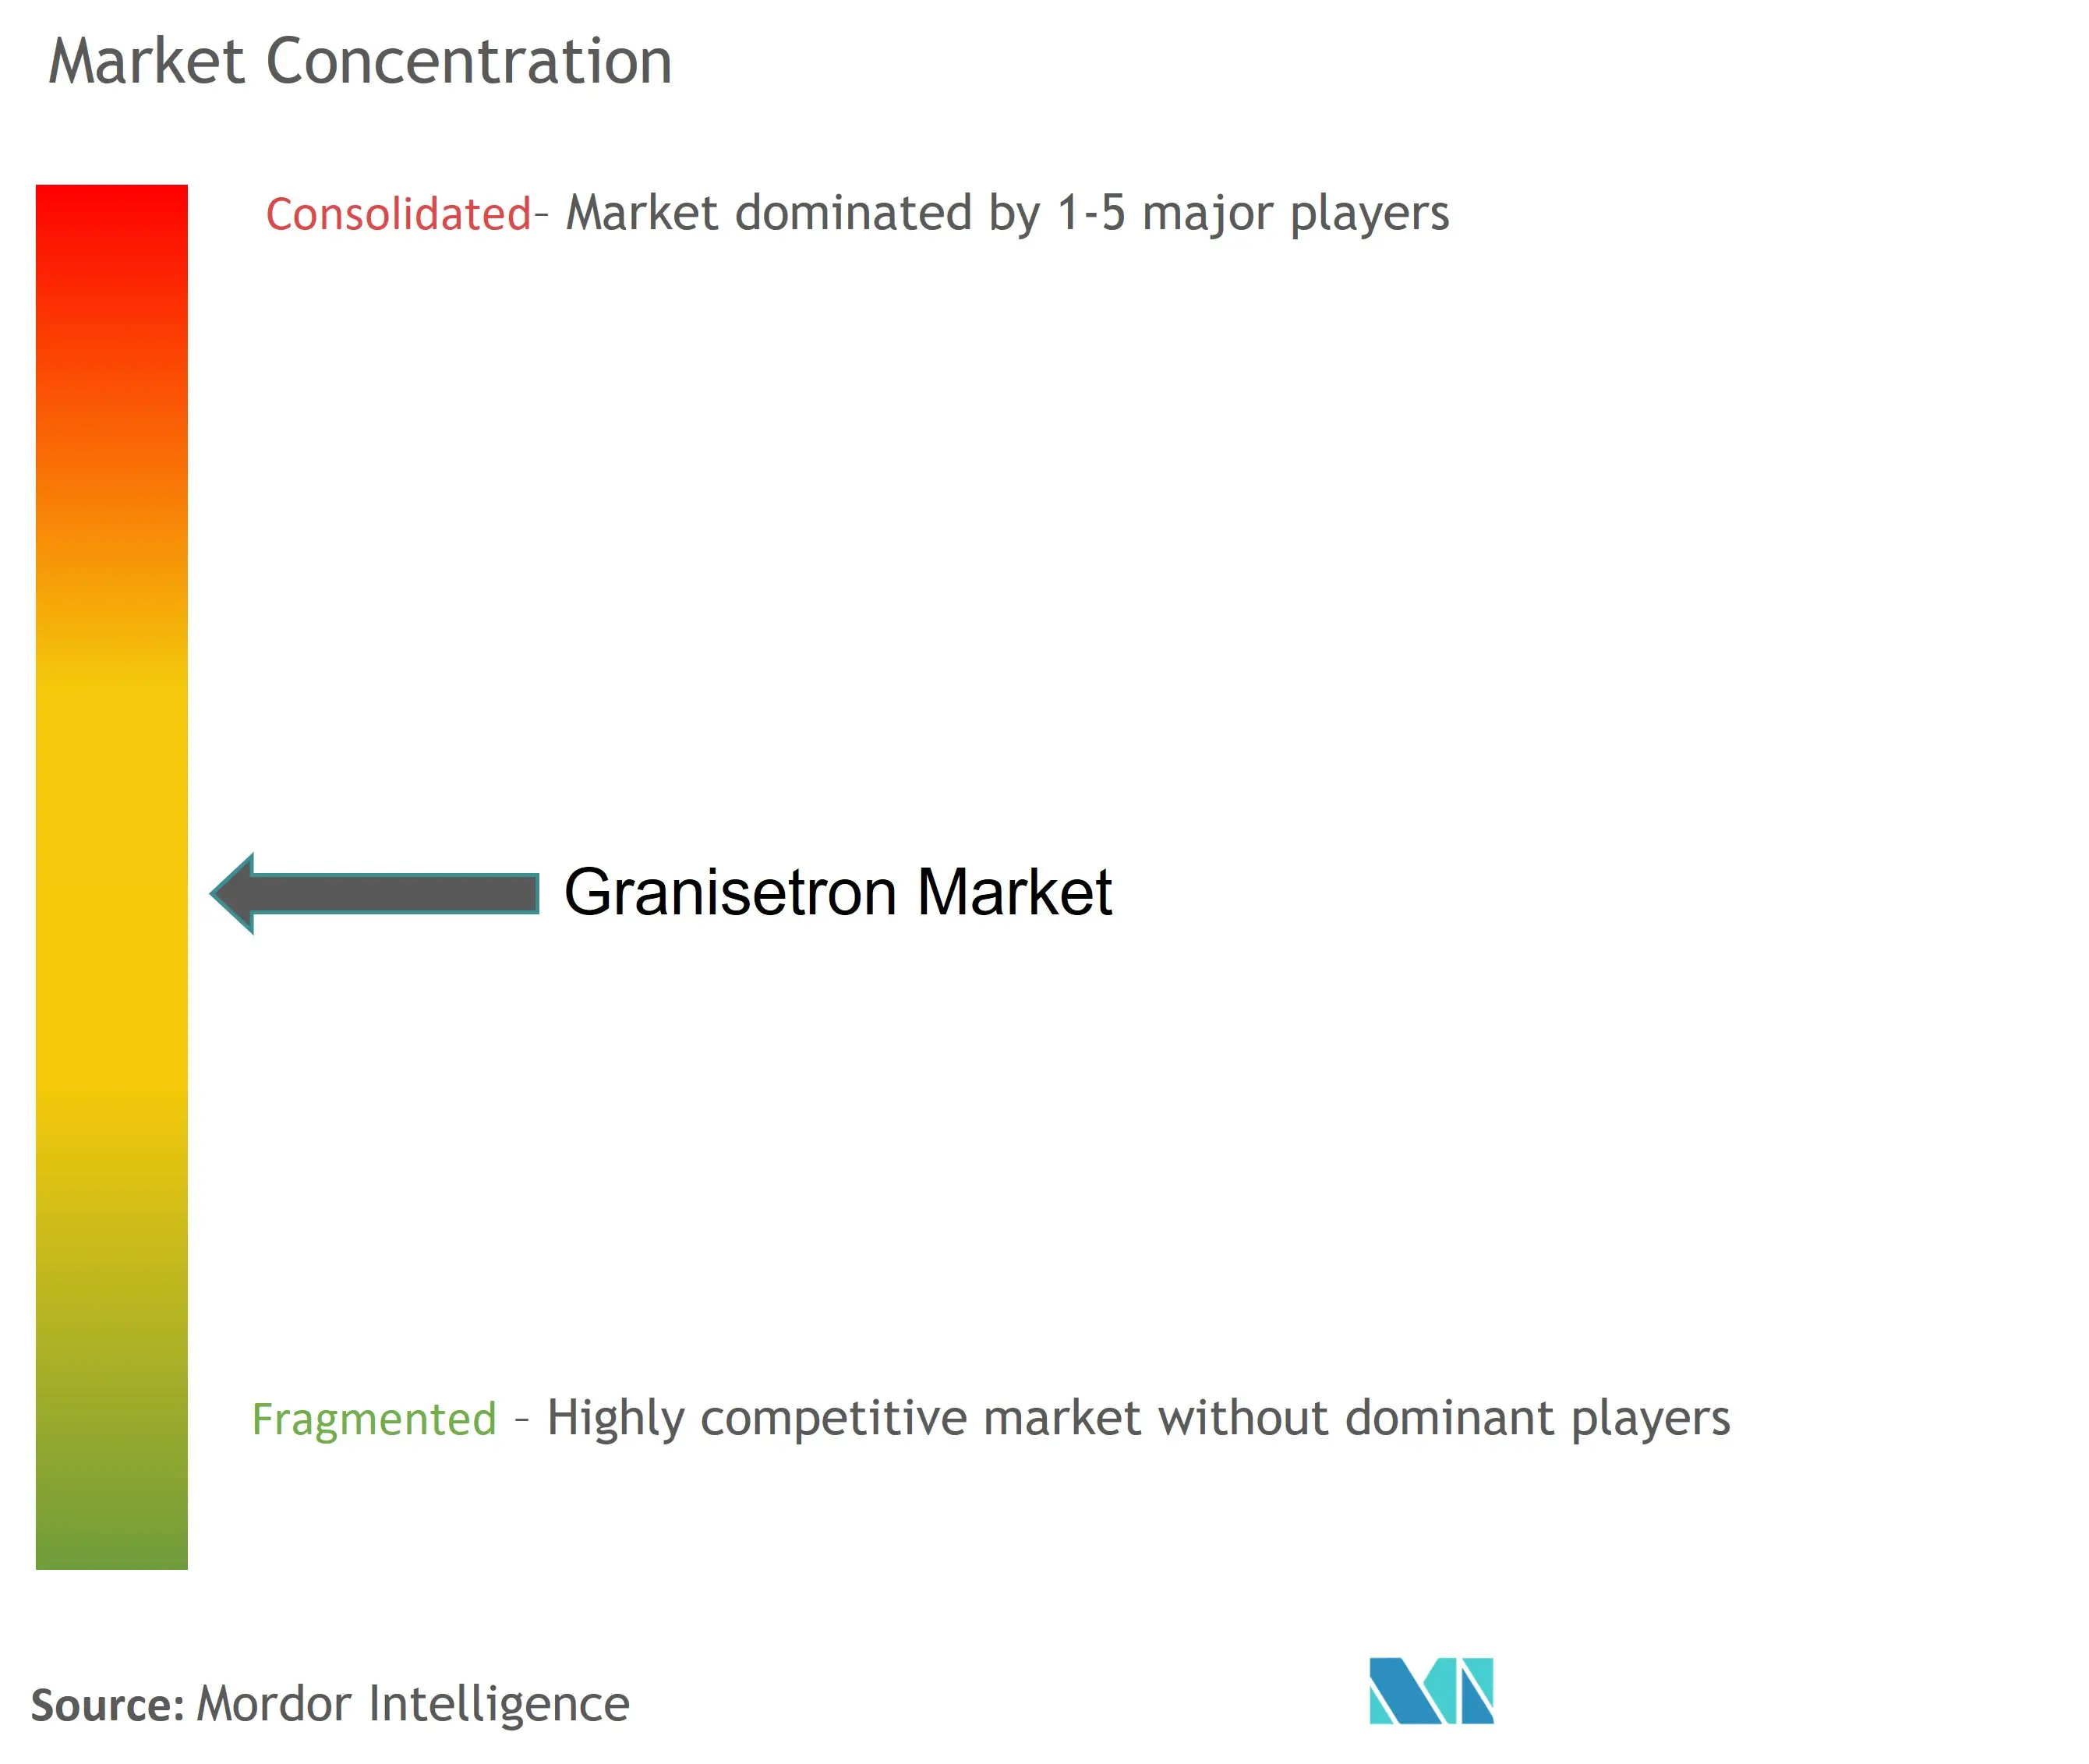 Granisetron Market Concentration